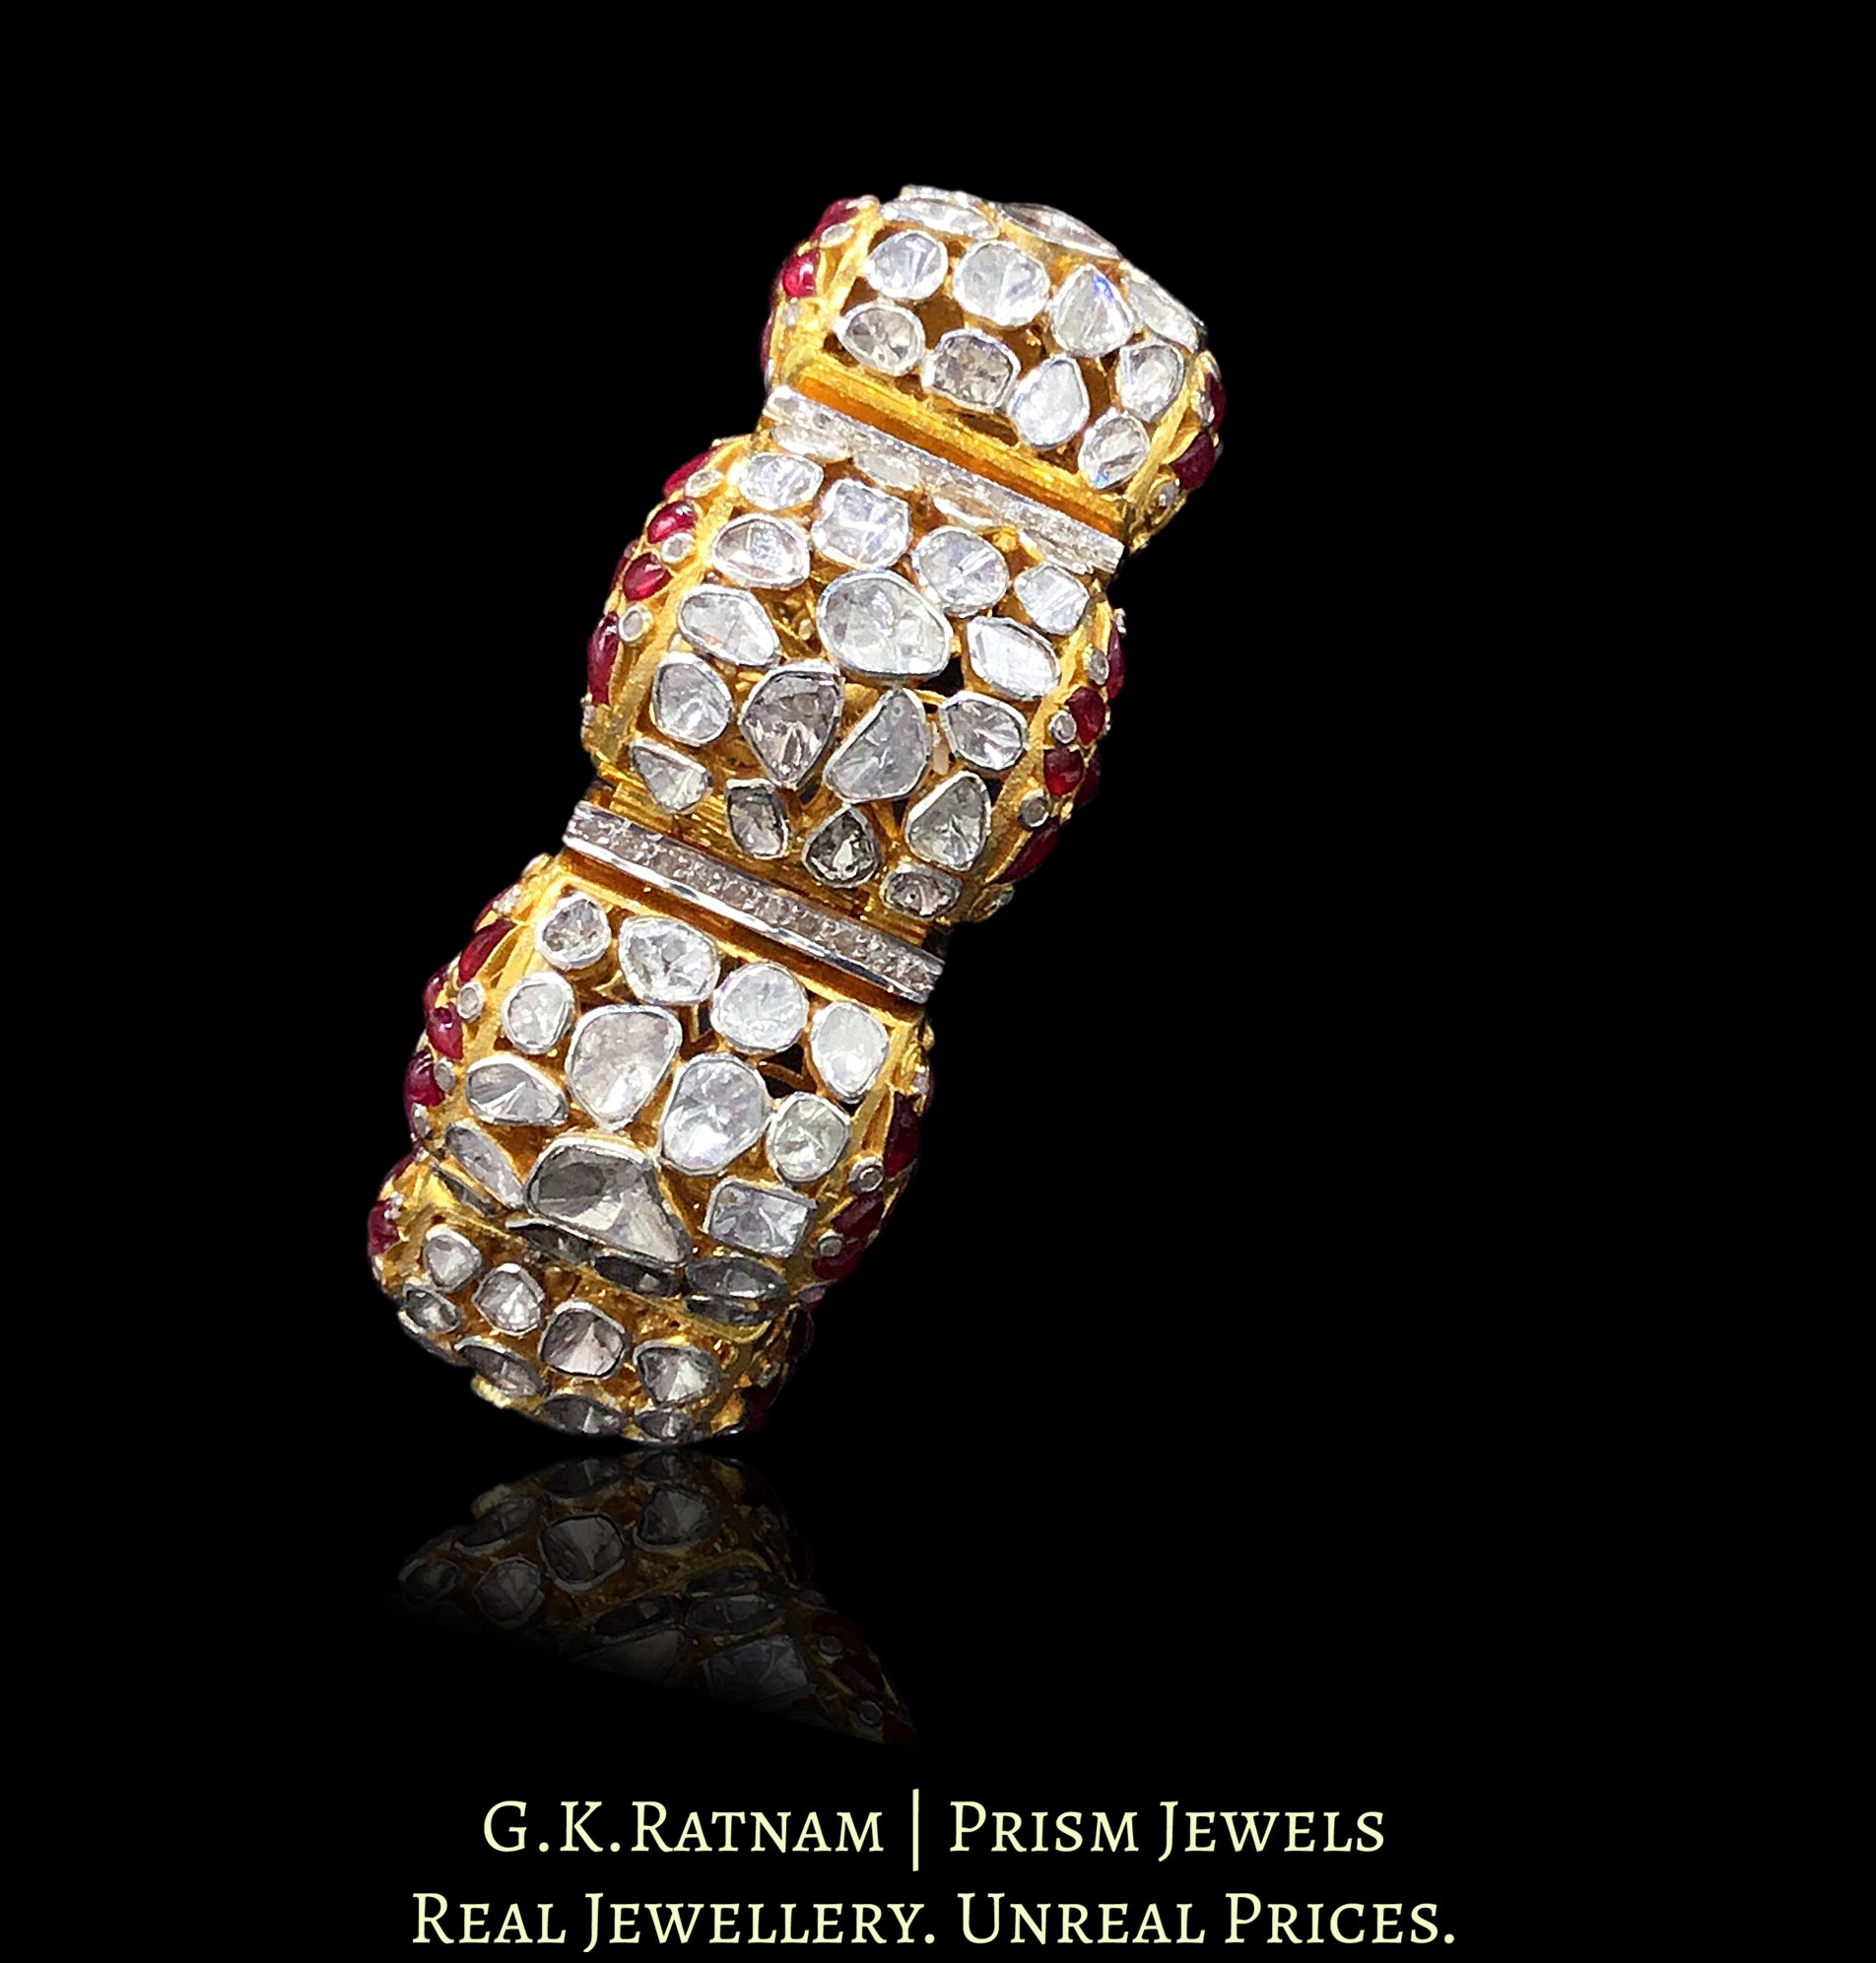 14k Gold and Diamond Polki Open Setting Bangle Pair (Pacheli) with Rubies